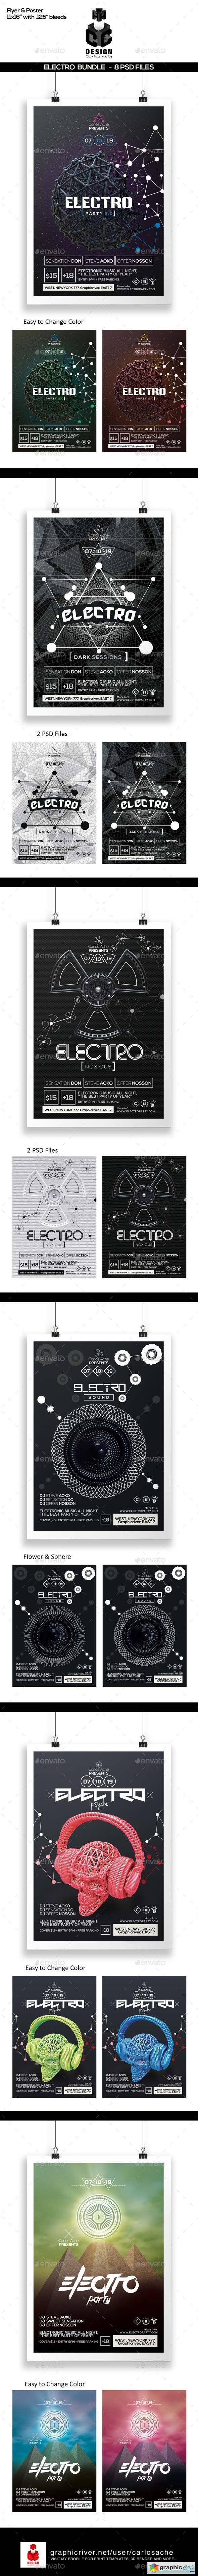 Electro Bundle Poster & Flyer Templates